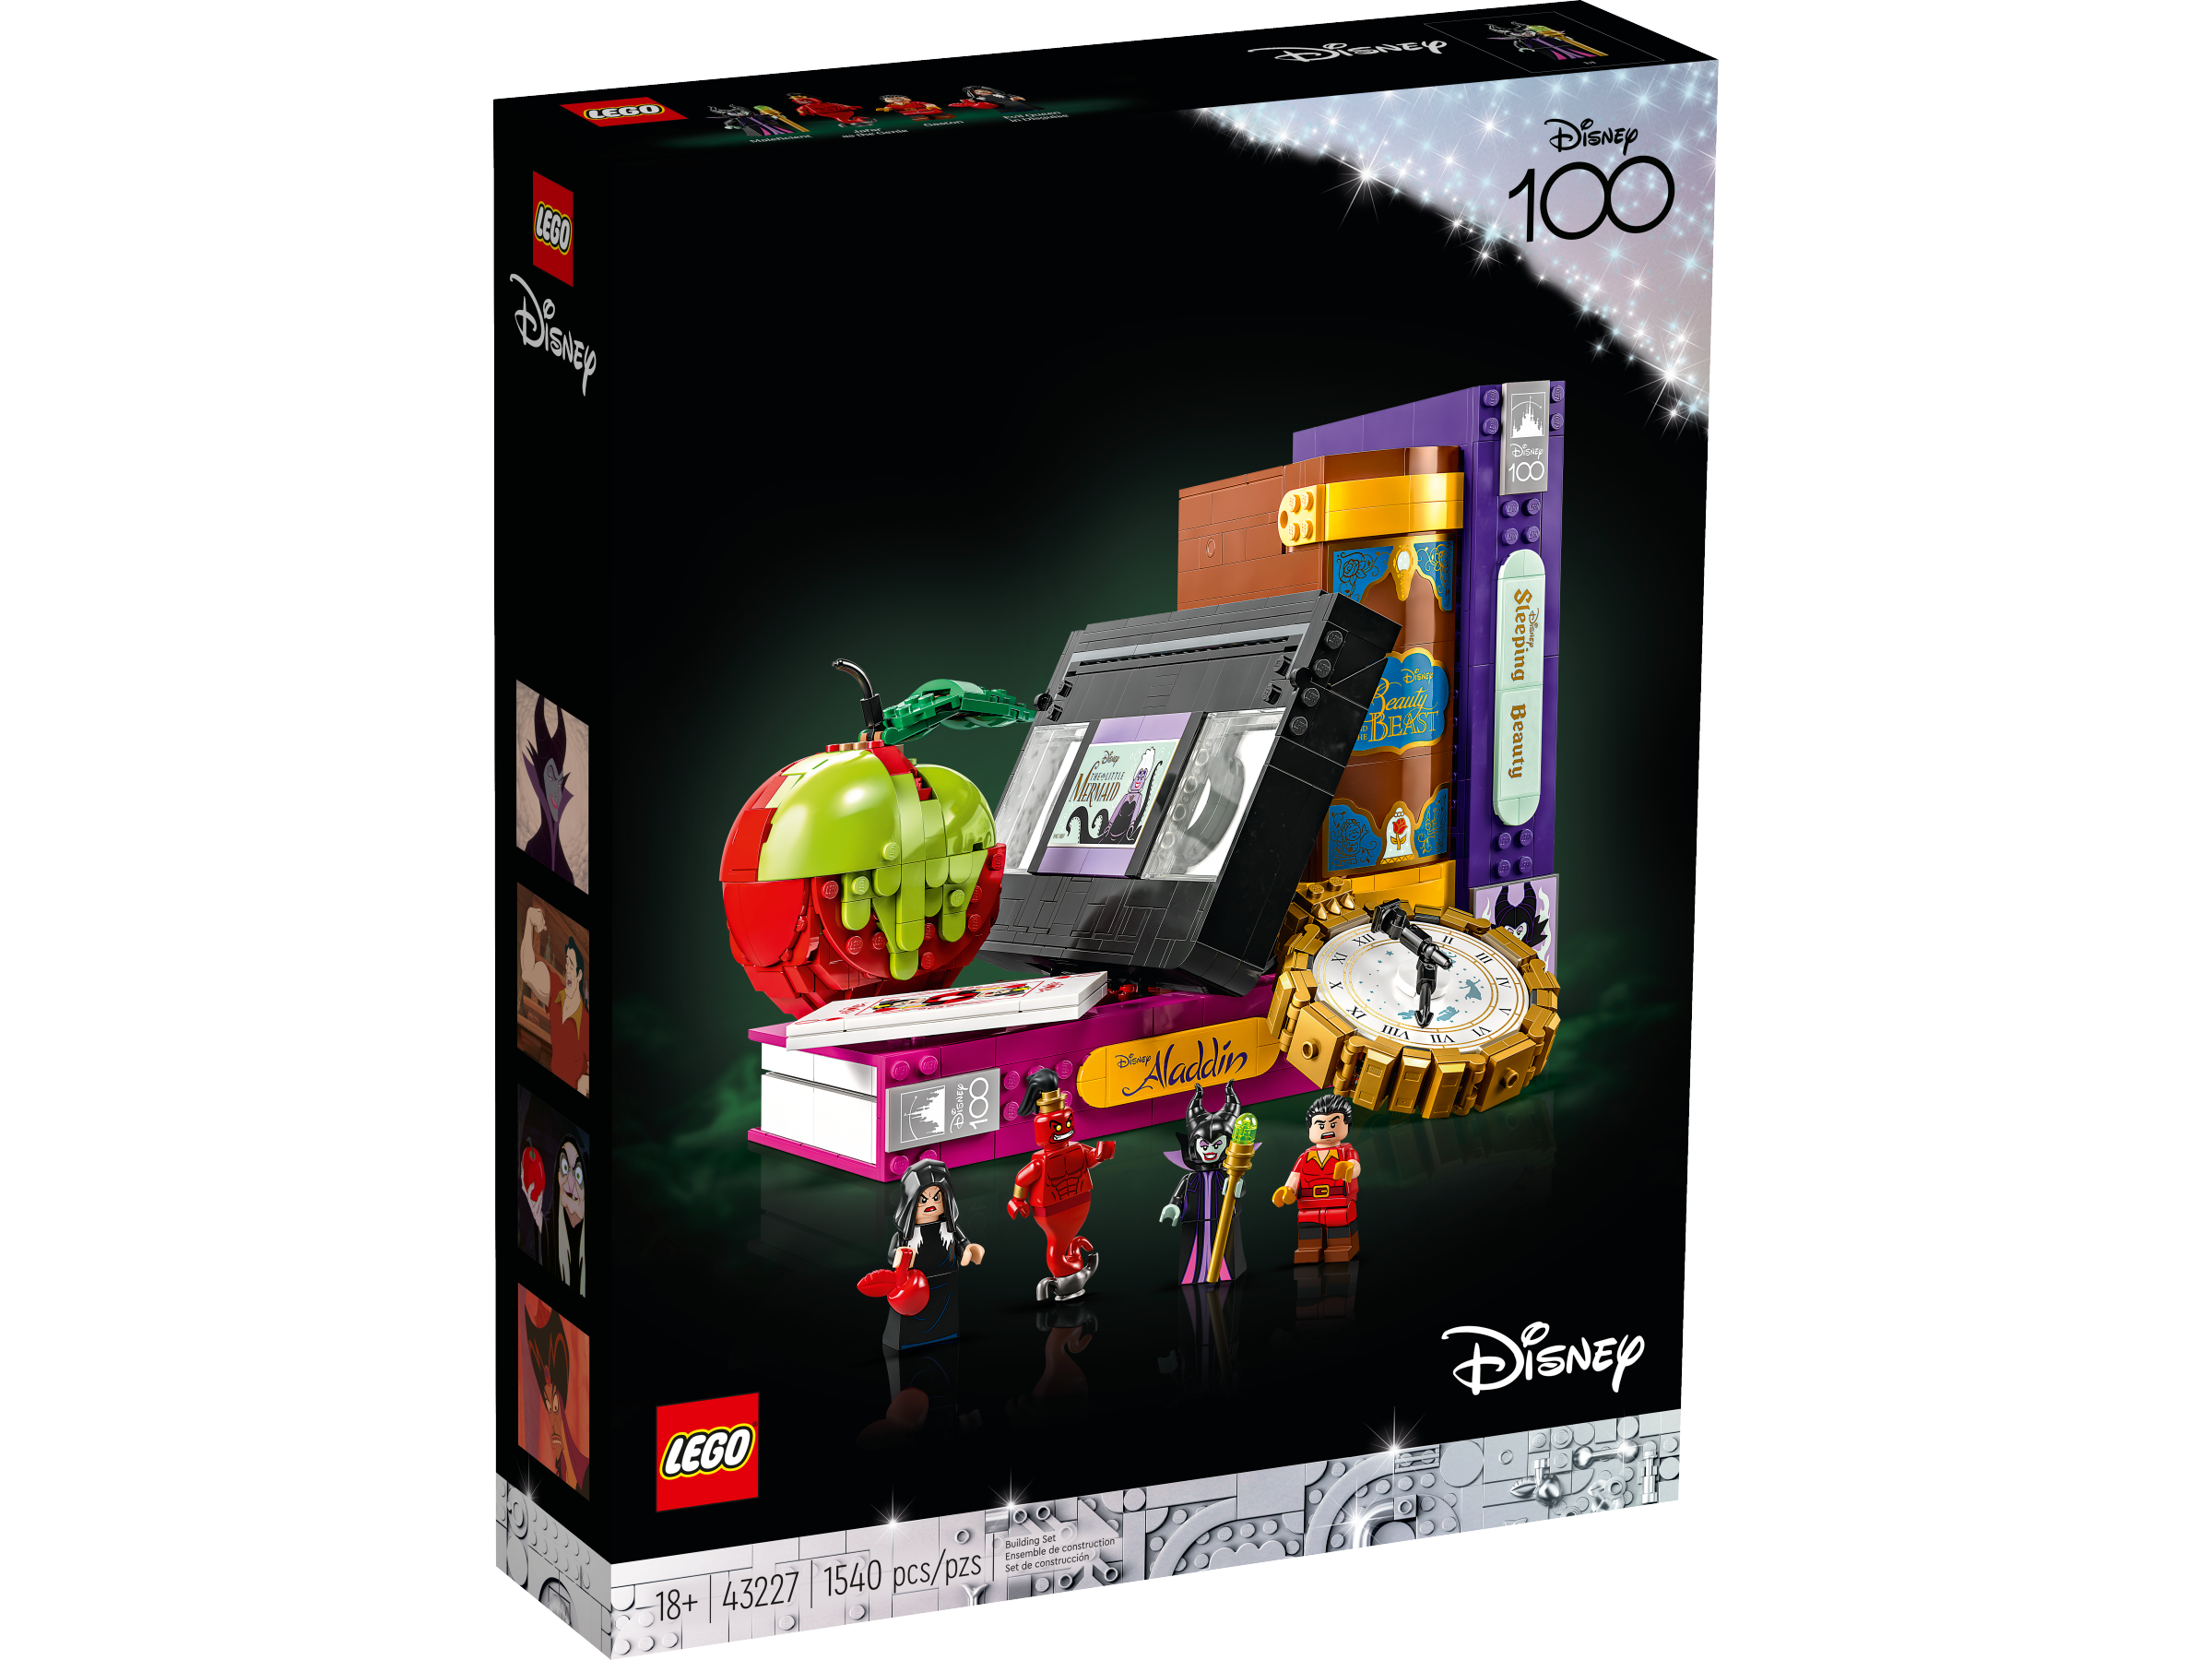 Disney 100 Lego Minifigures